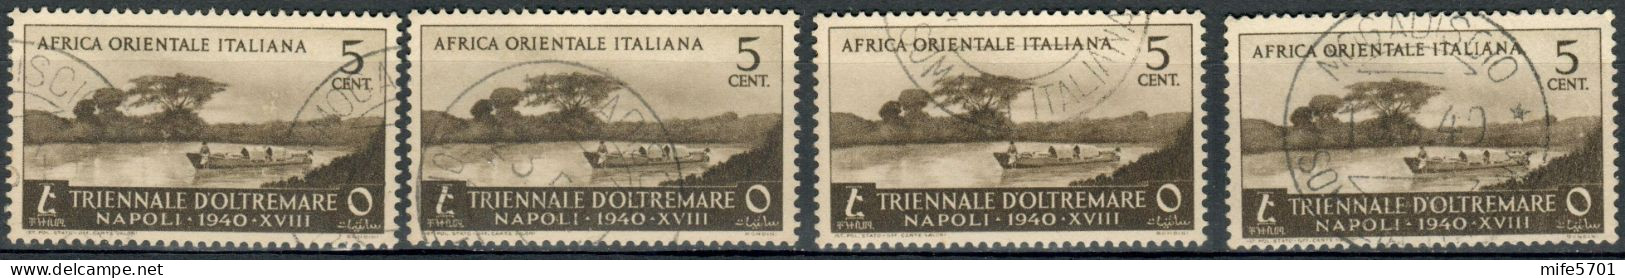 REGNO AFRICA ORIENTALE ITALIANA 1940 A.O.I. 1ª MOSTRA TRIENNALE D'OLTREMARE 4 ESEMPLARI DA C. 5 USATI - SASSONE 27 - Africa Orientale Italiana